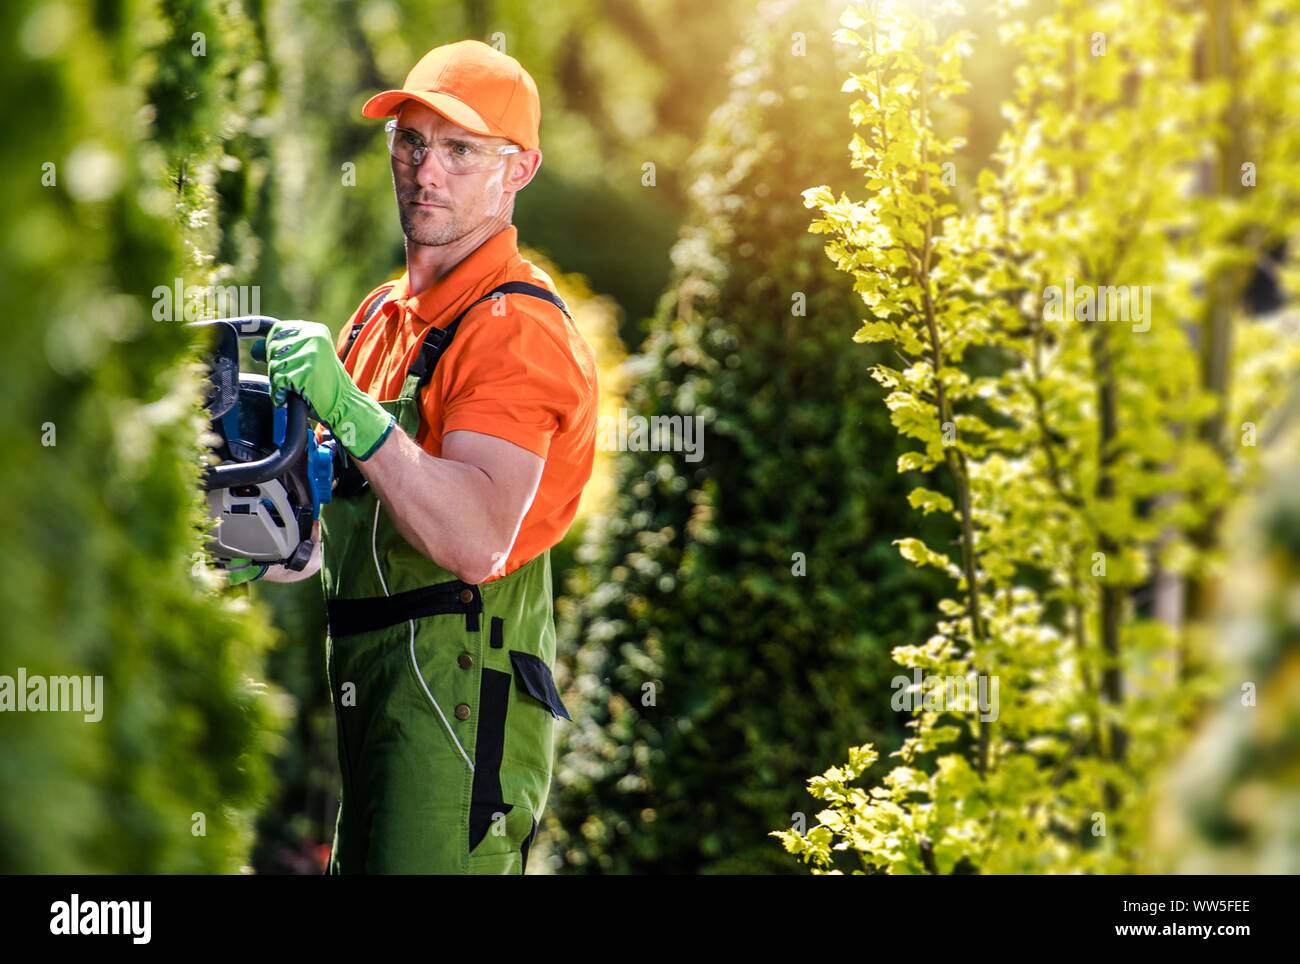 Thuja Green Wall Shaping by Caucasian Professional Gardener in His 30s. Gardening Theme. Stock Photo